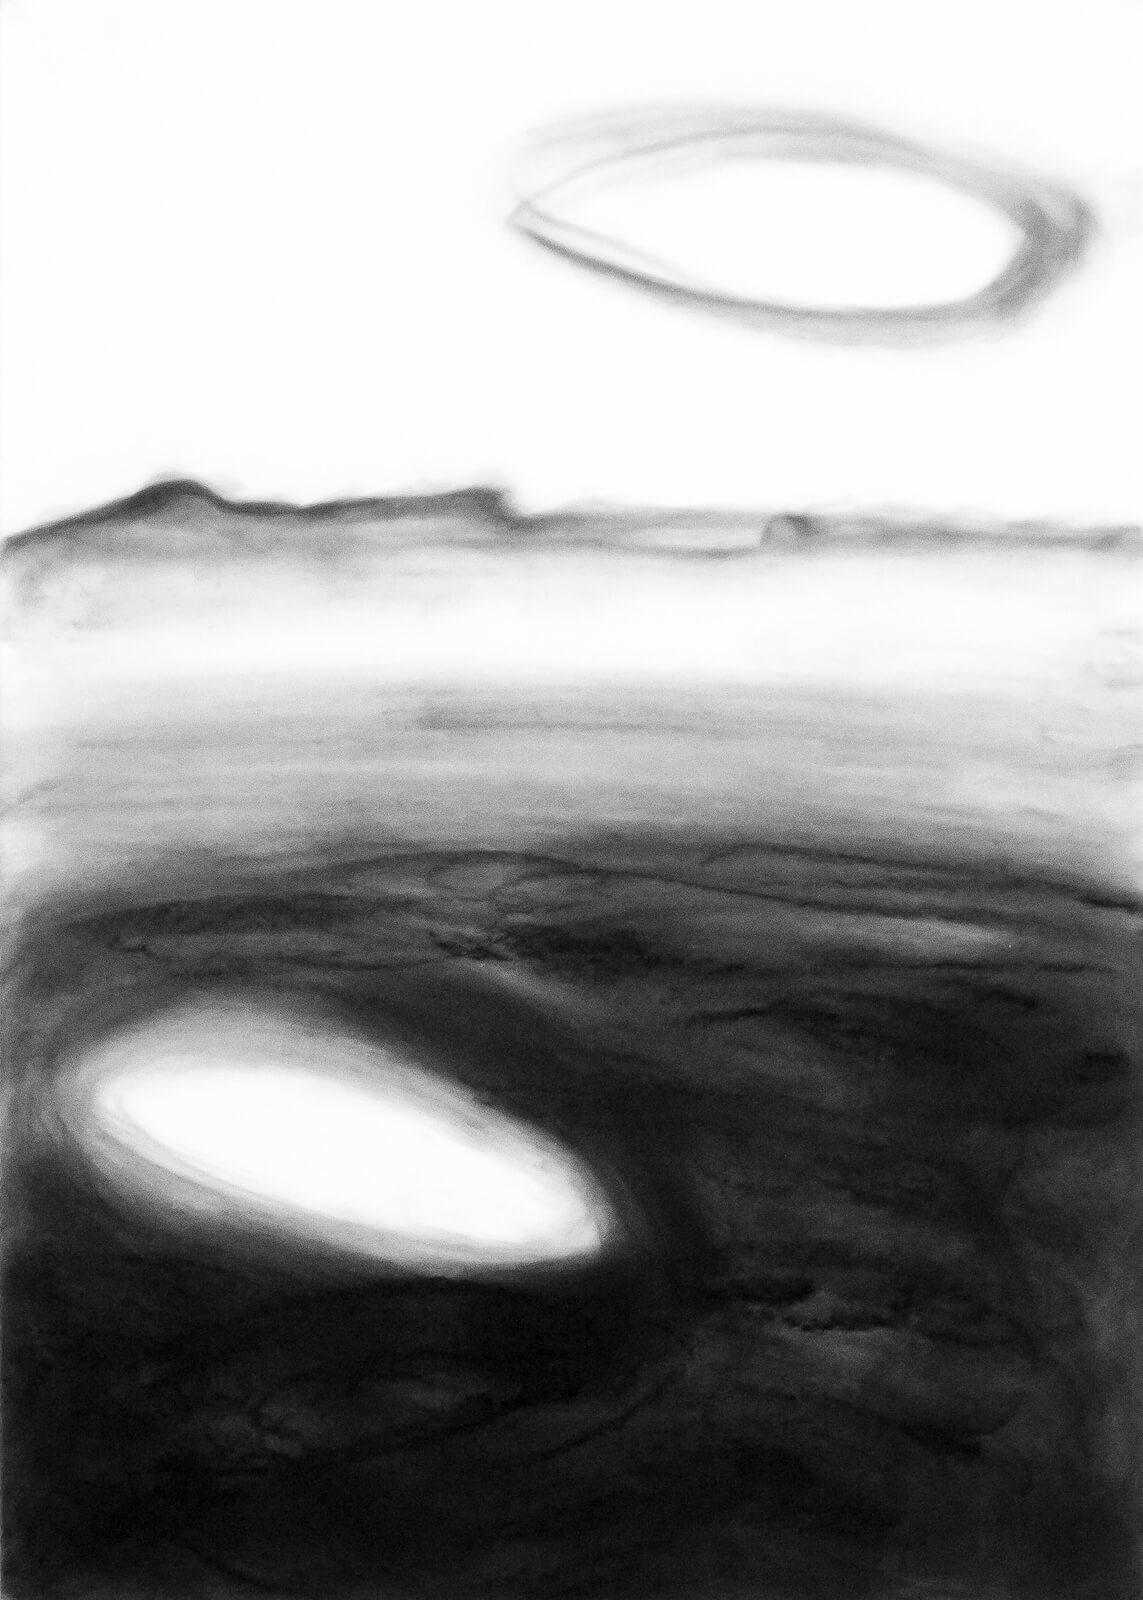 Axis Mundi 2:7, charcoal on paper, 60 x 40 cm